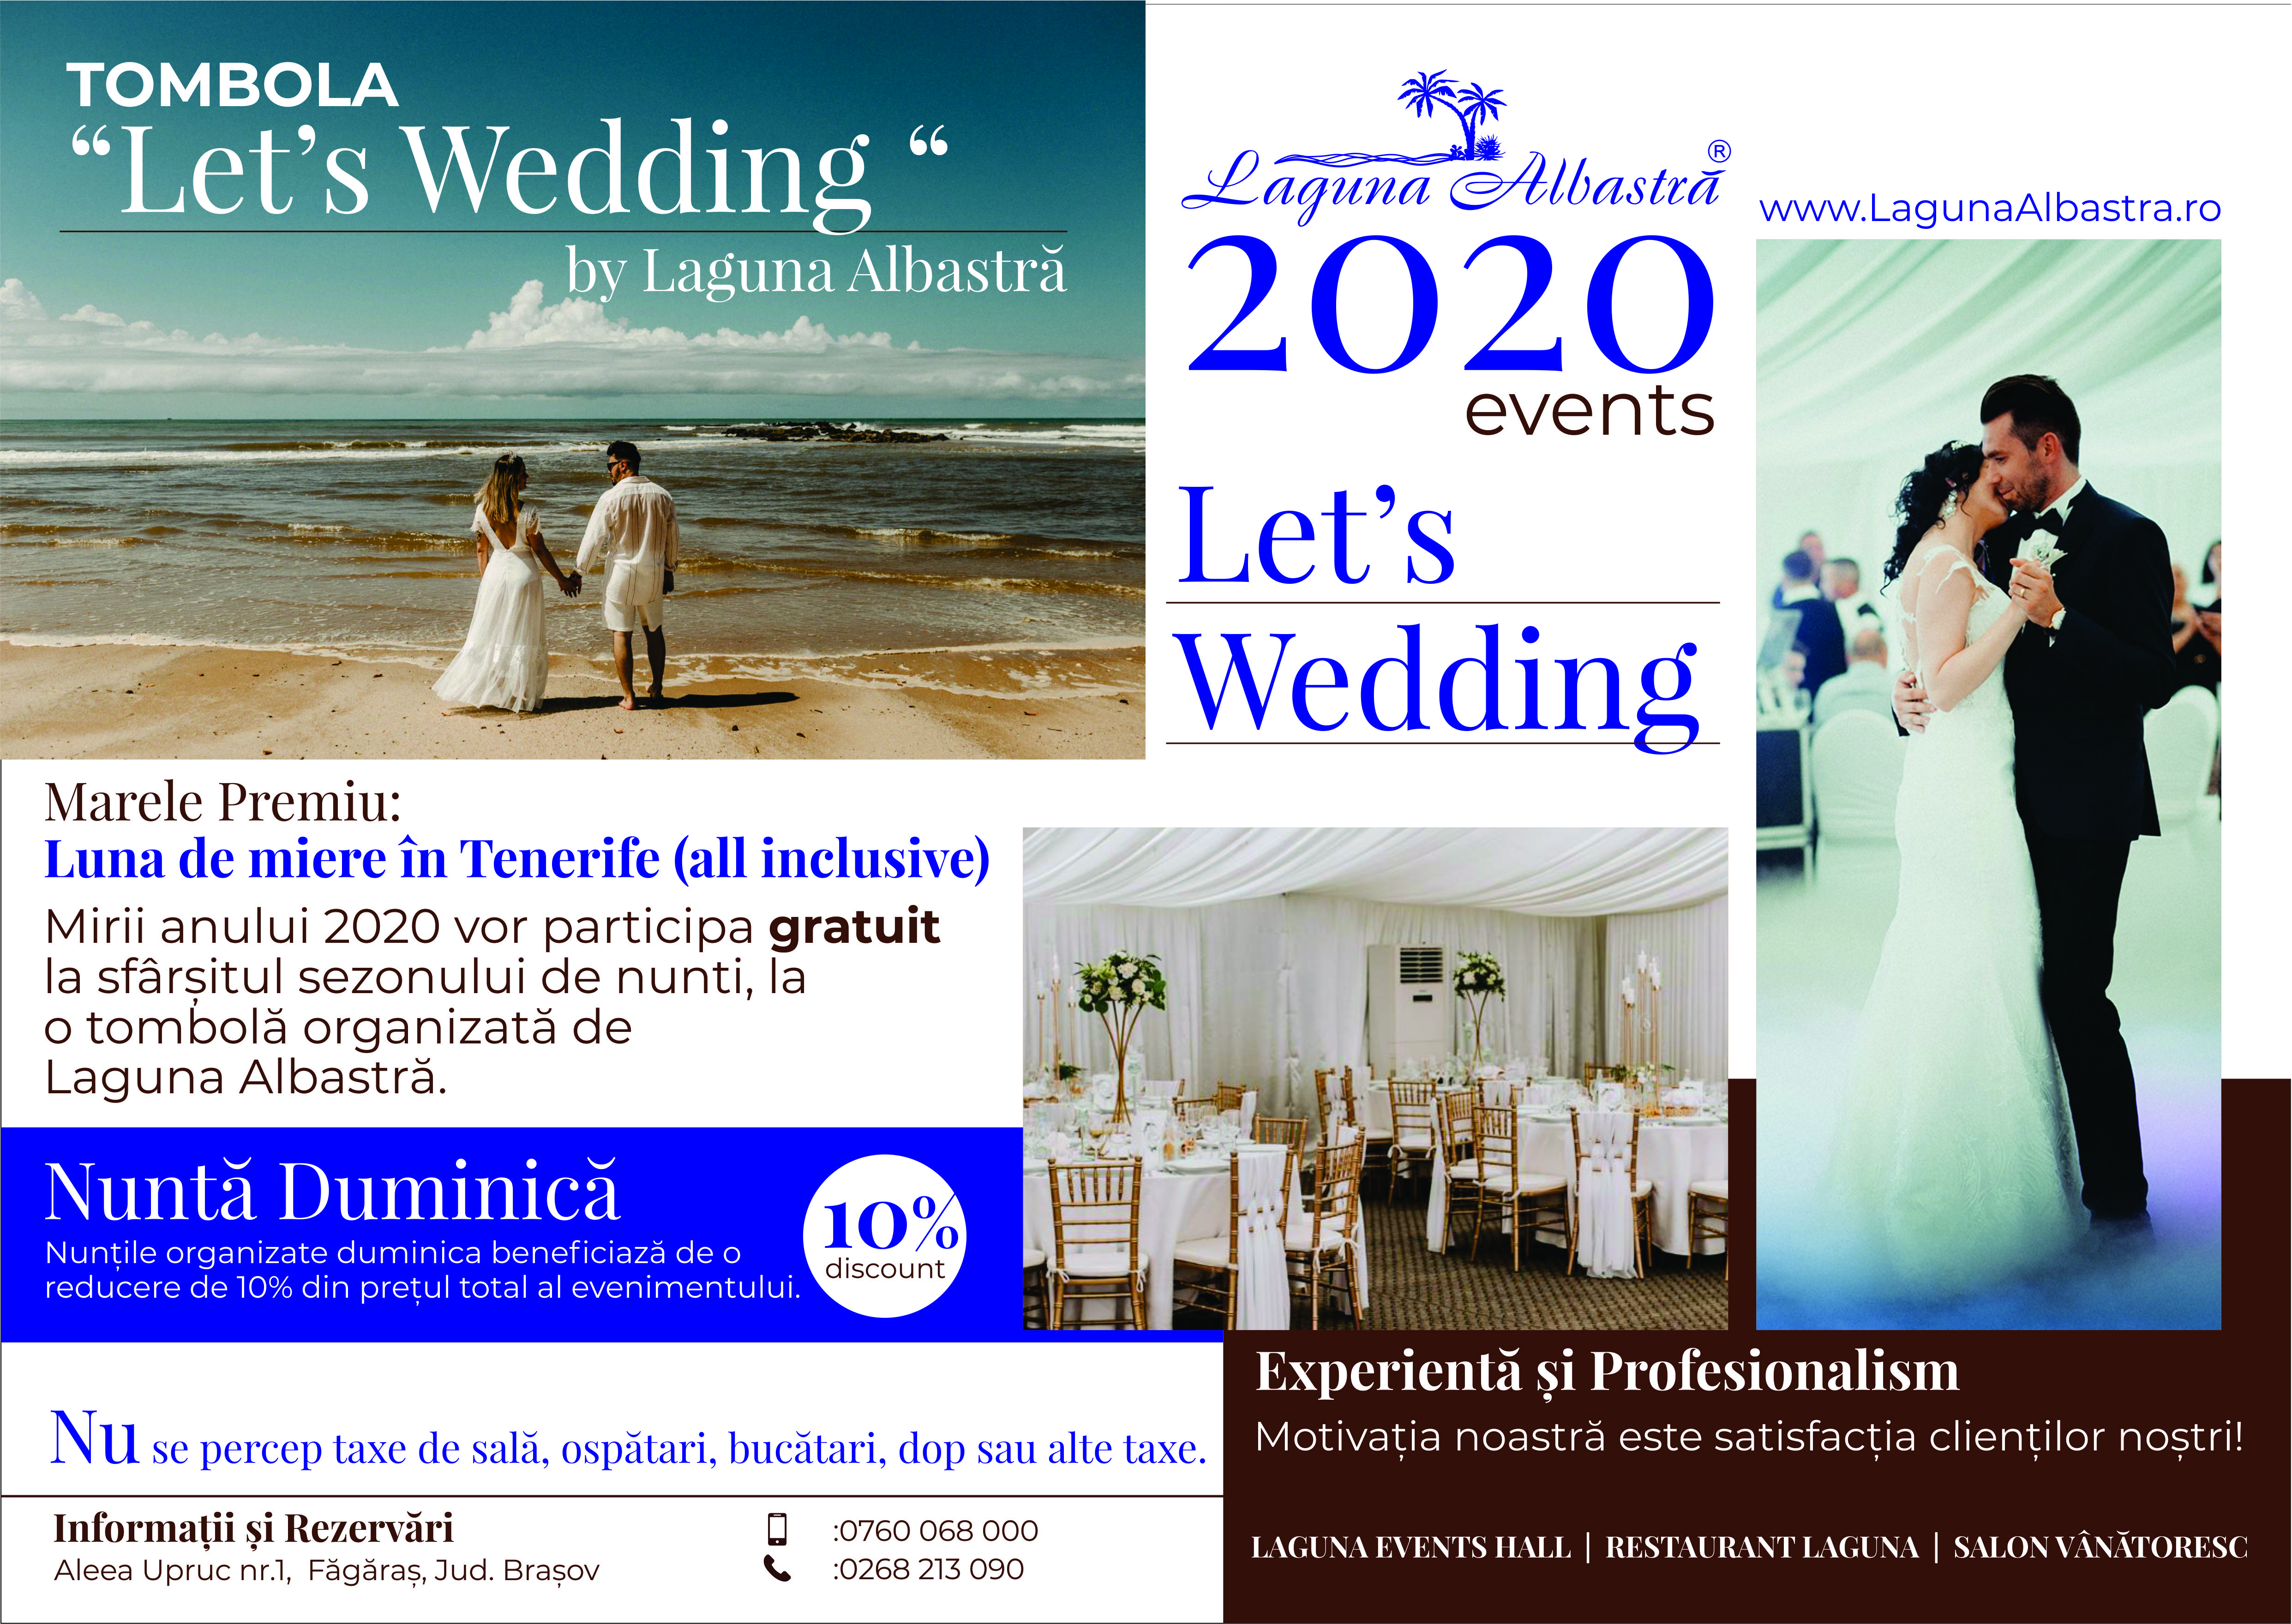 Tombola Let's Wedding 2020 by Laguna Albastra